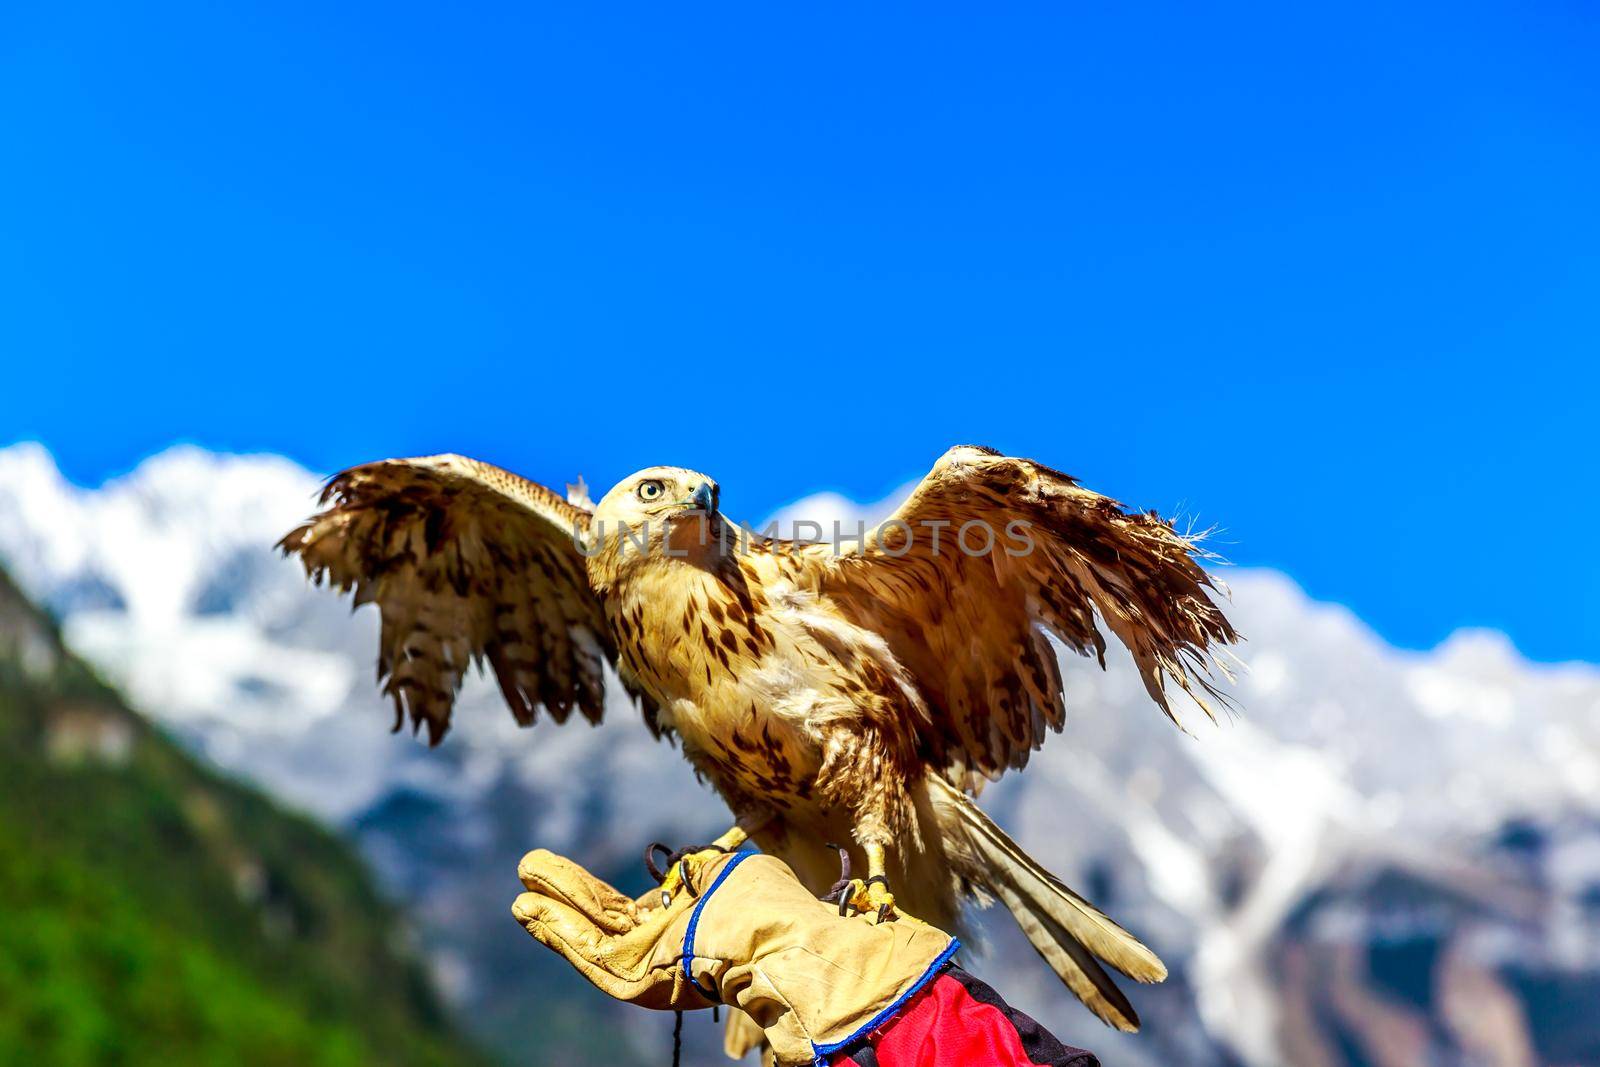 Falcon at Yulong Snow Mountain by gepeng